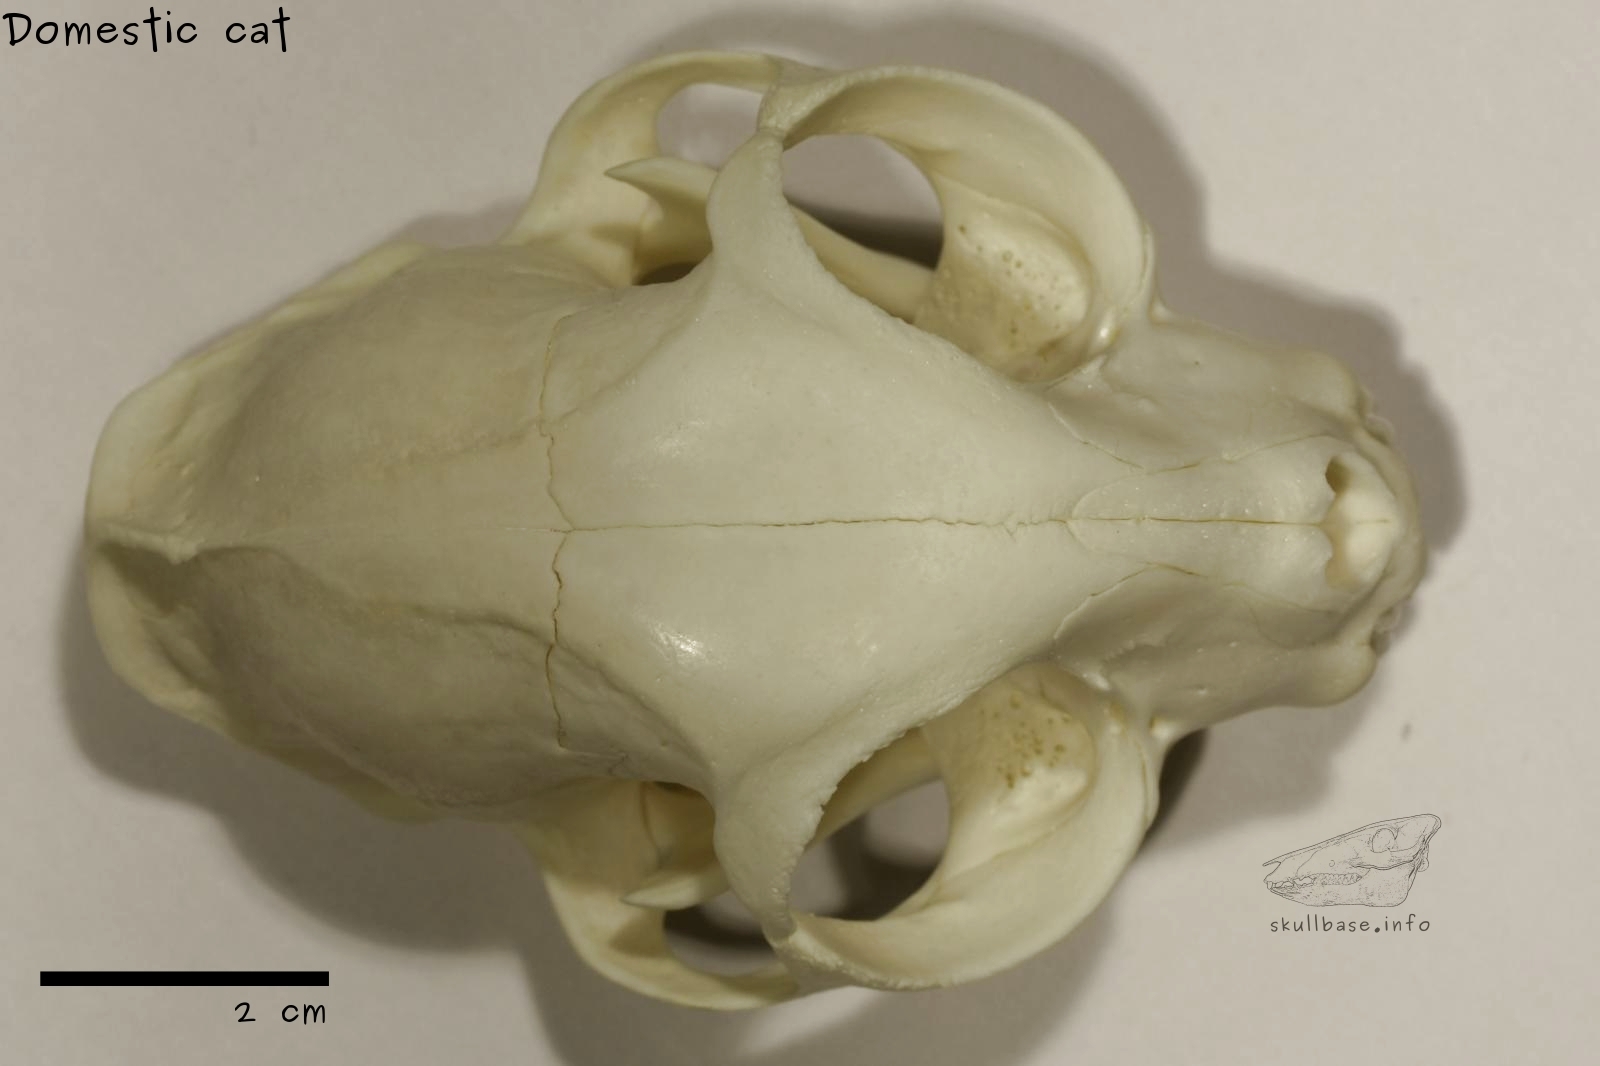 Domestic cat (Felis catus) skull dorsal view